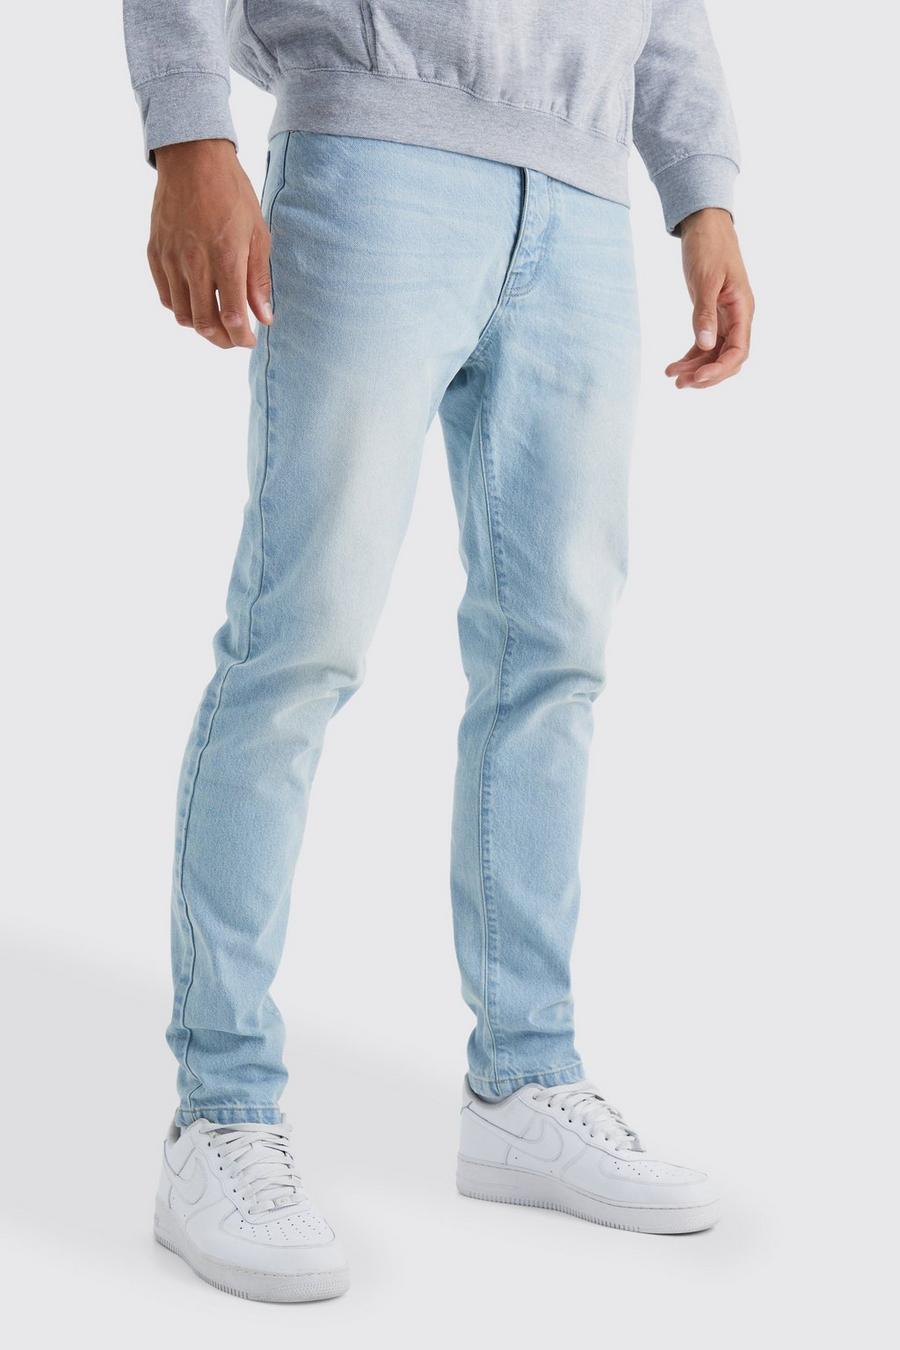 Men's Tapered Jeans, Men's Slim Tapered Jeans